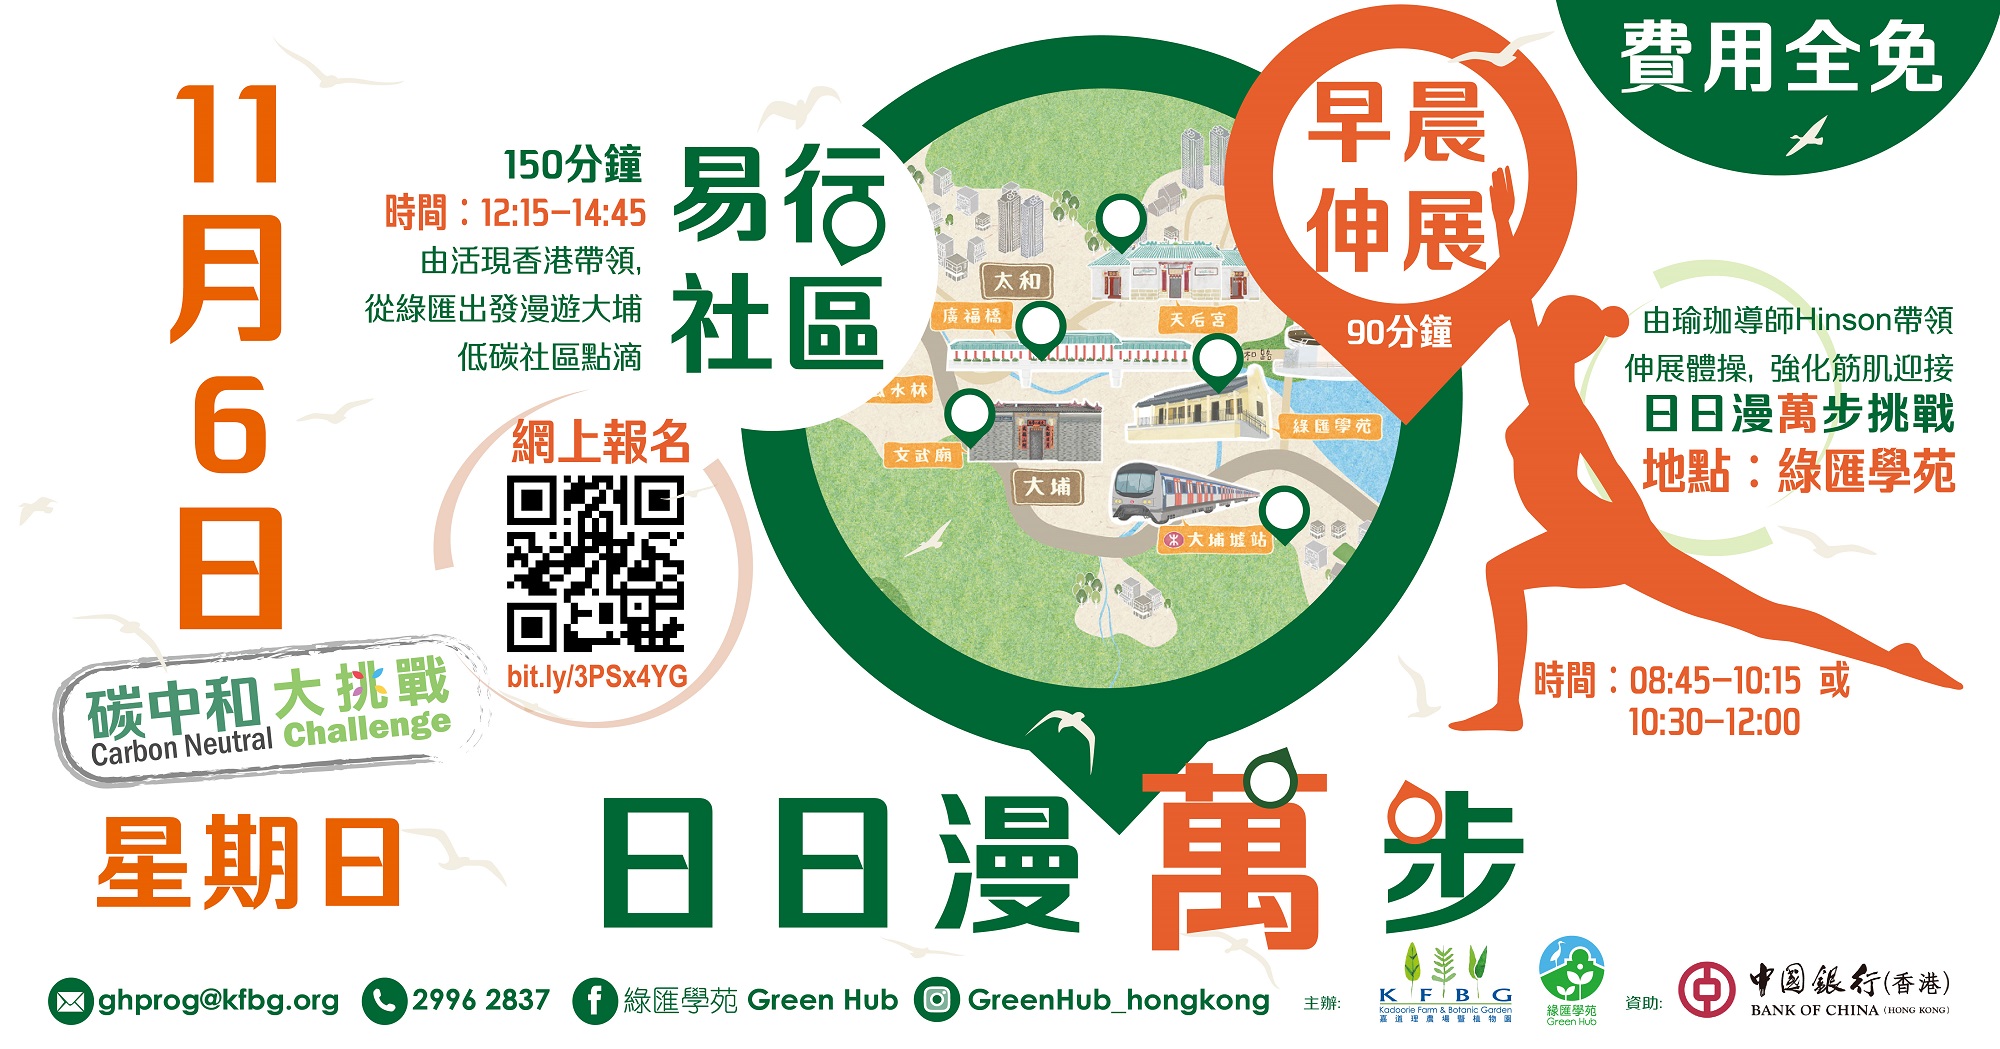 Morning Stretching Exercises @ Green Hub / Explore Low-carbon Community @ Tai Po